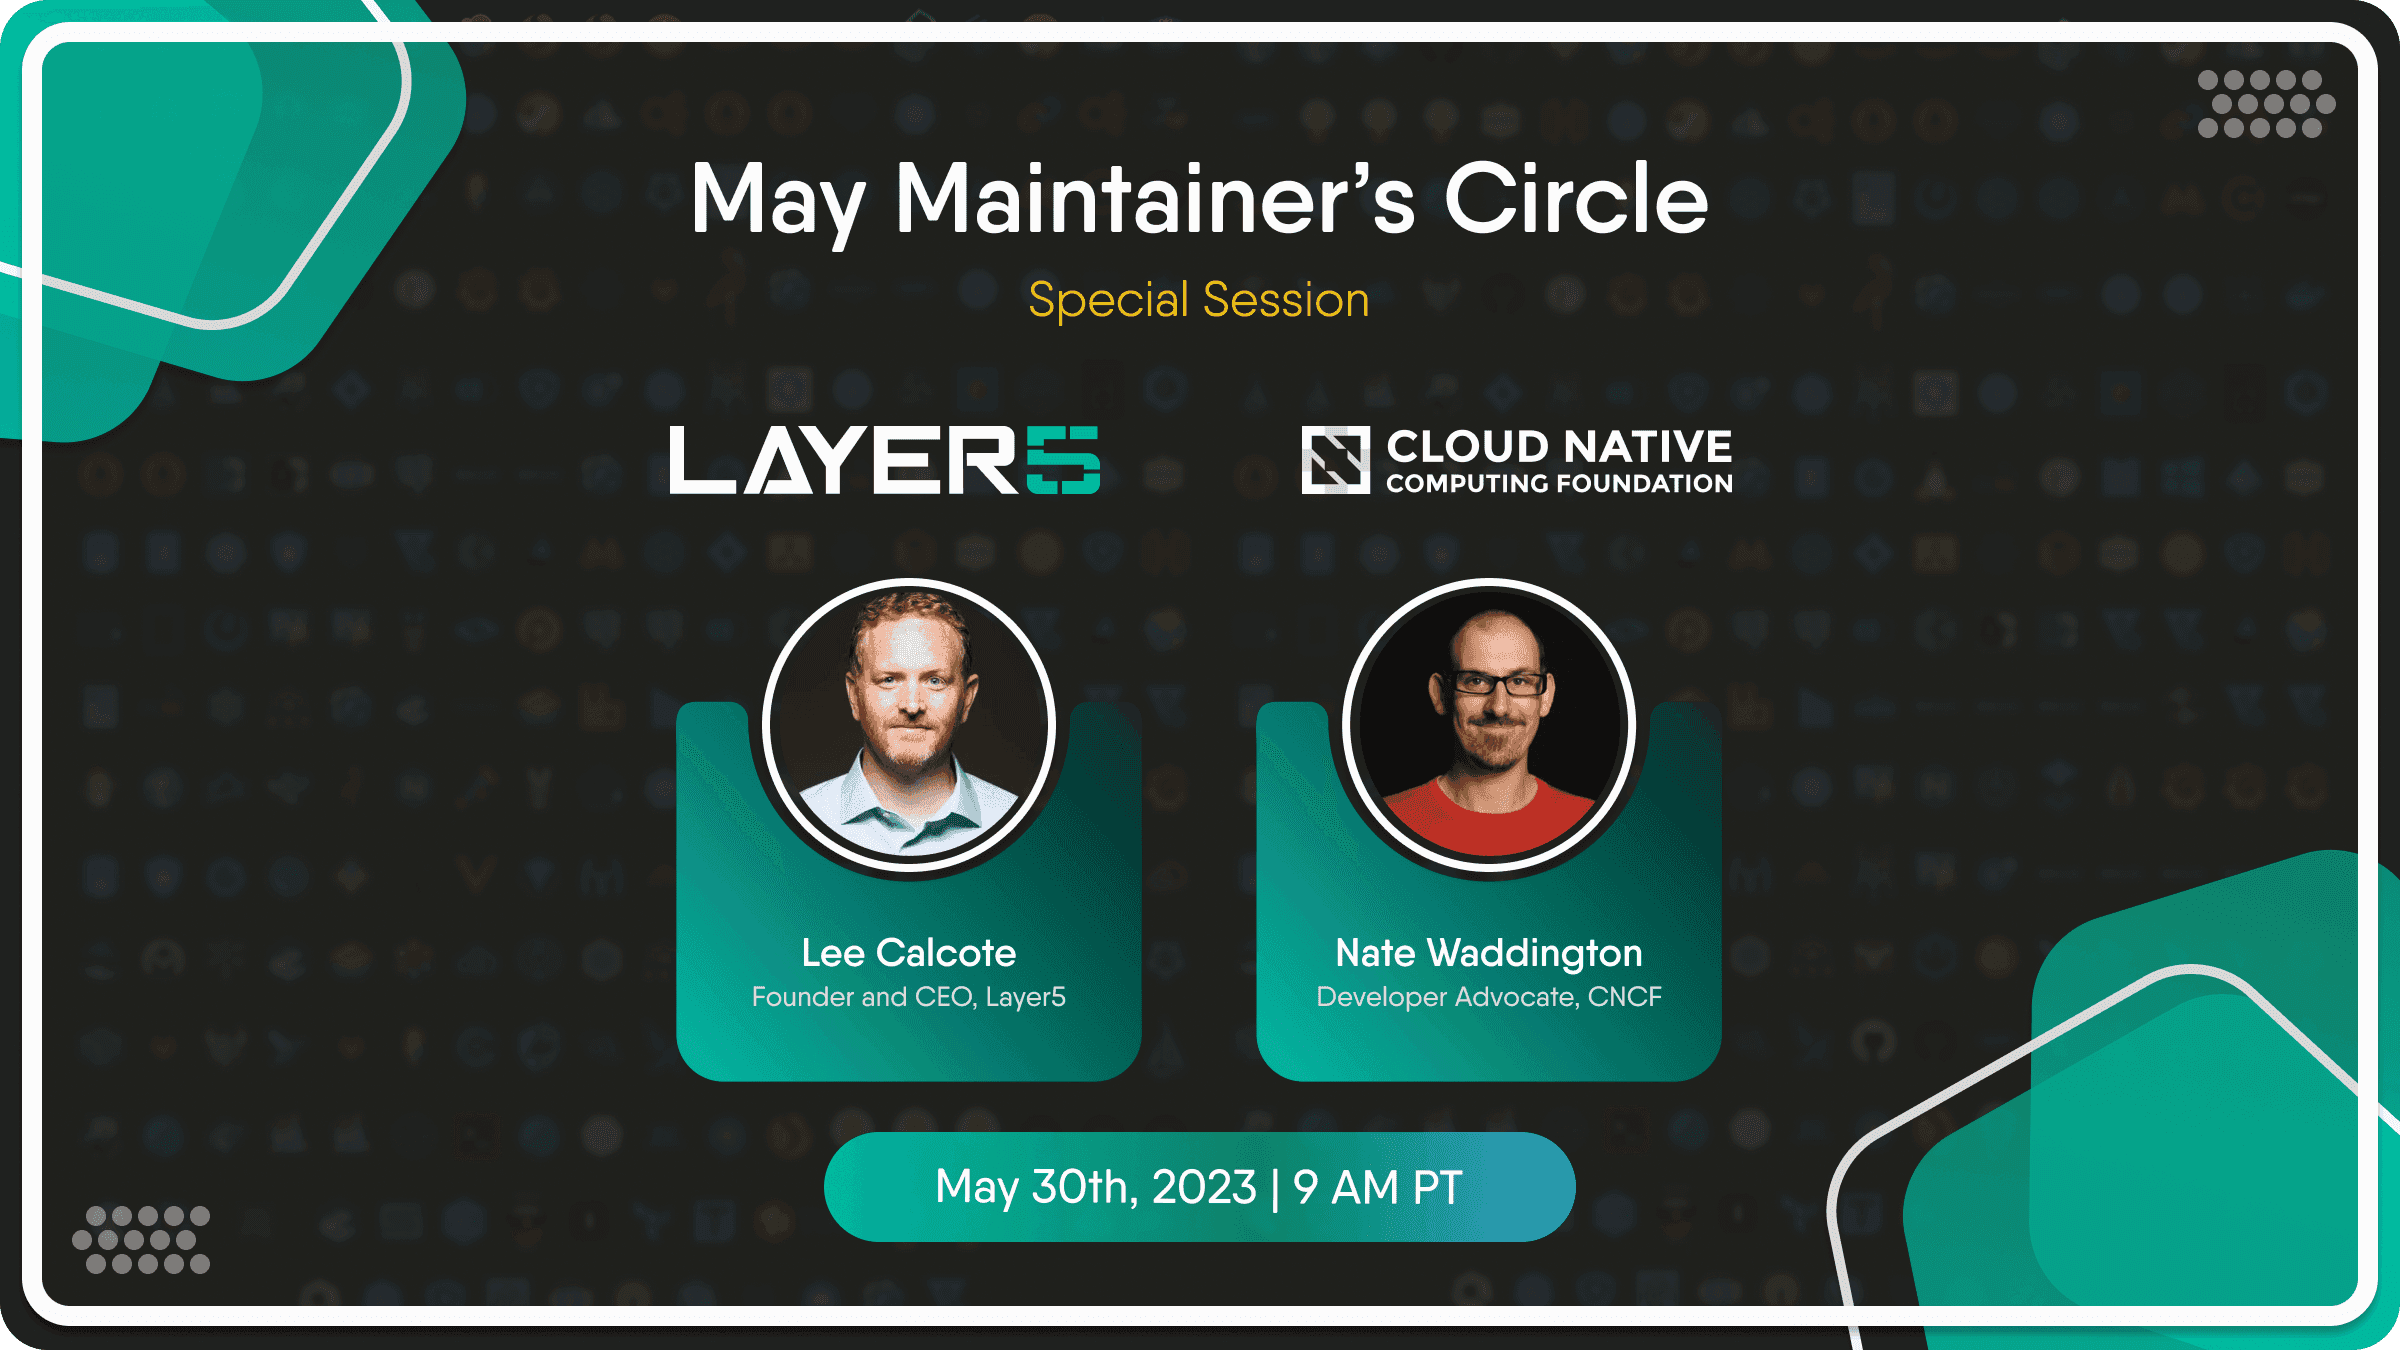 May Maintainer's Circle 2023